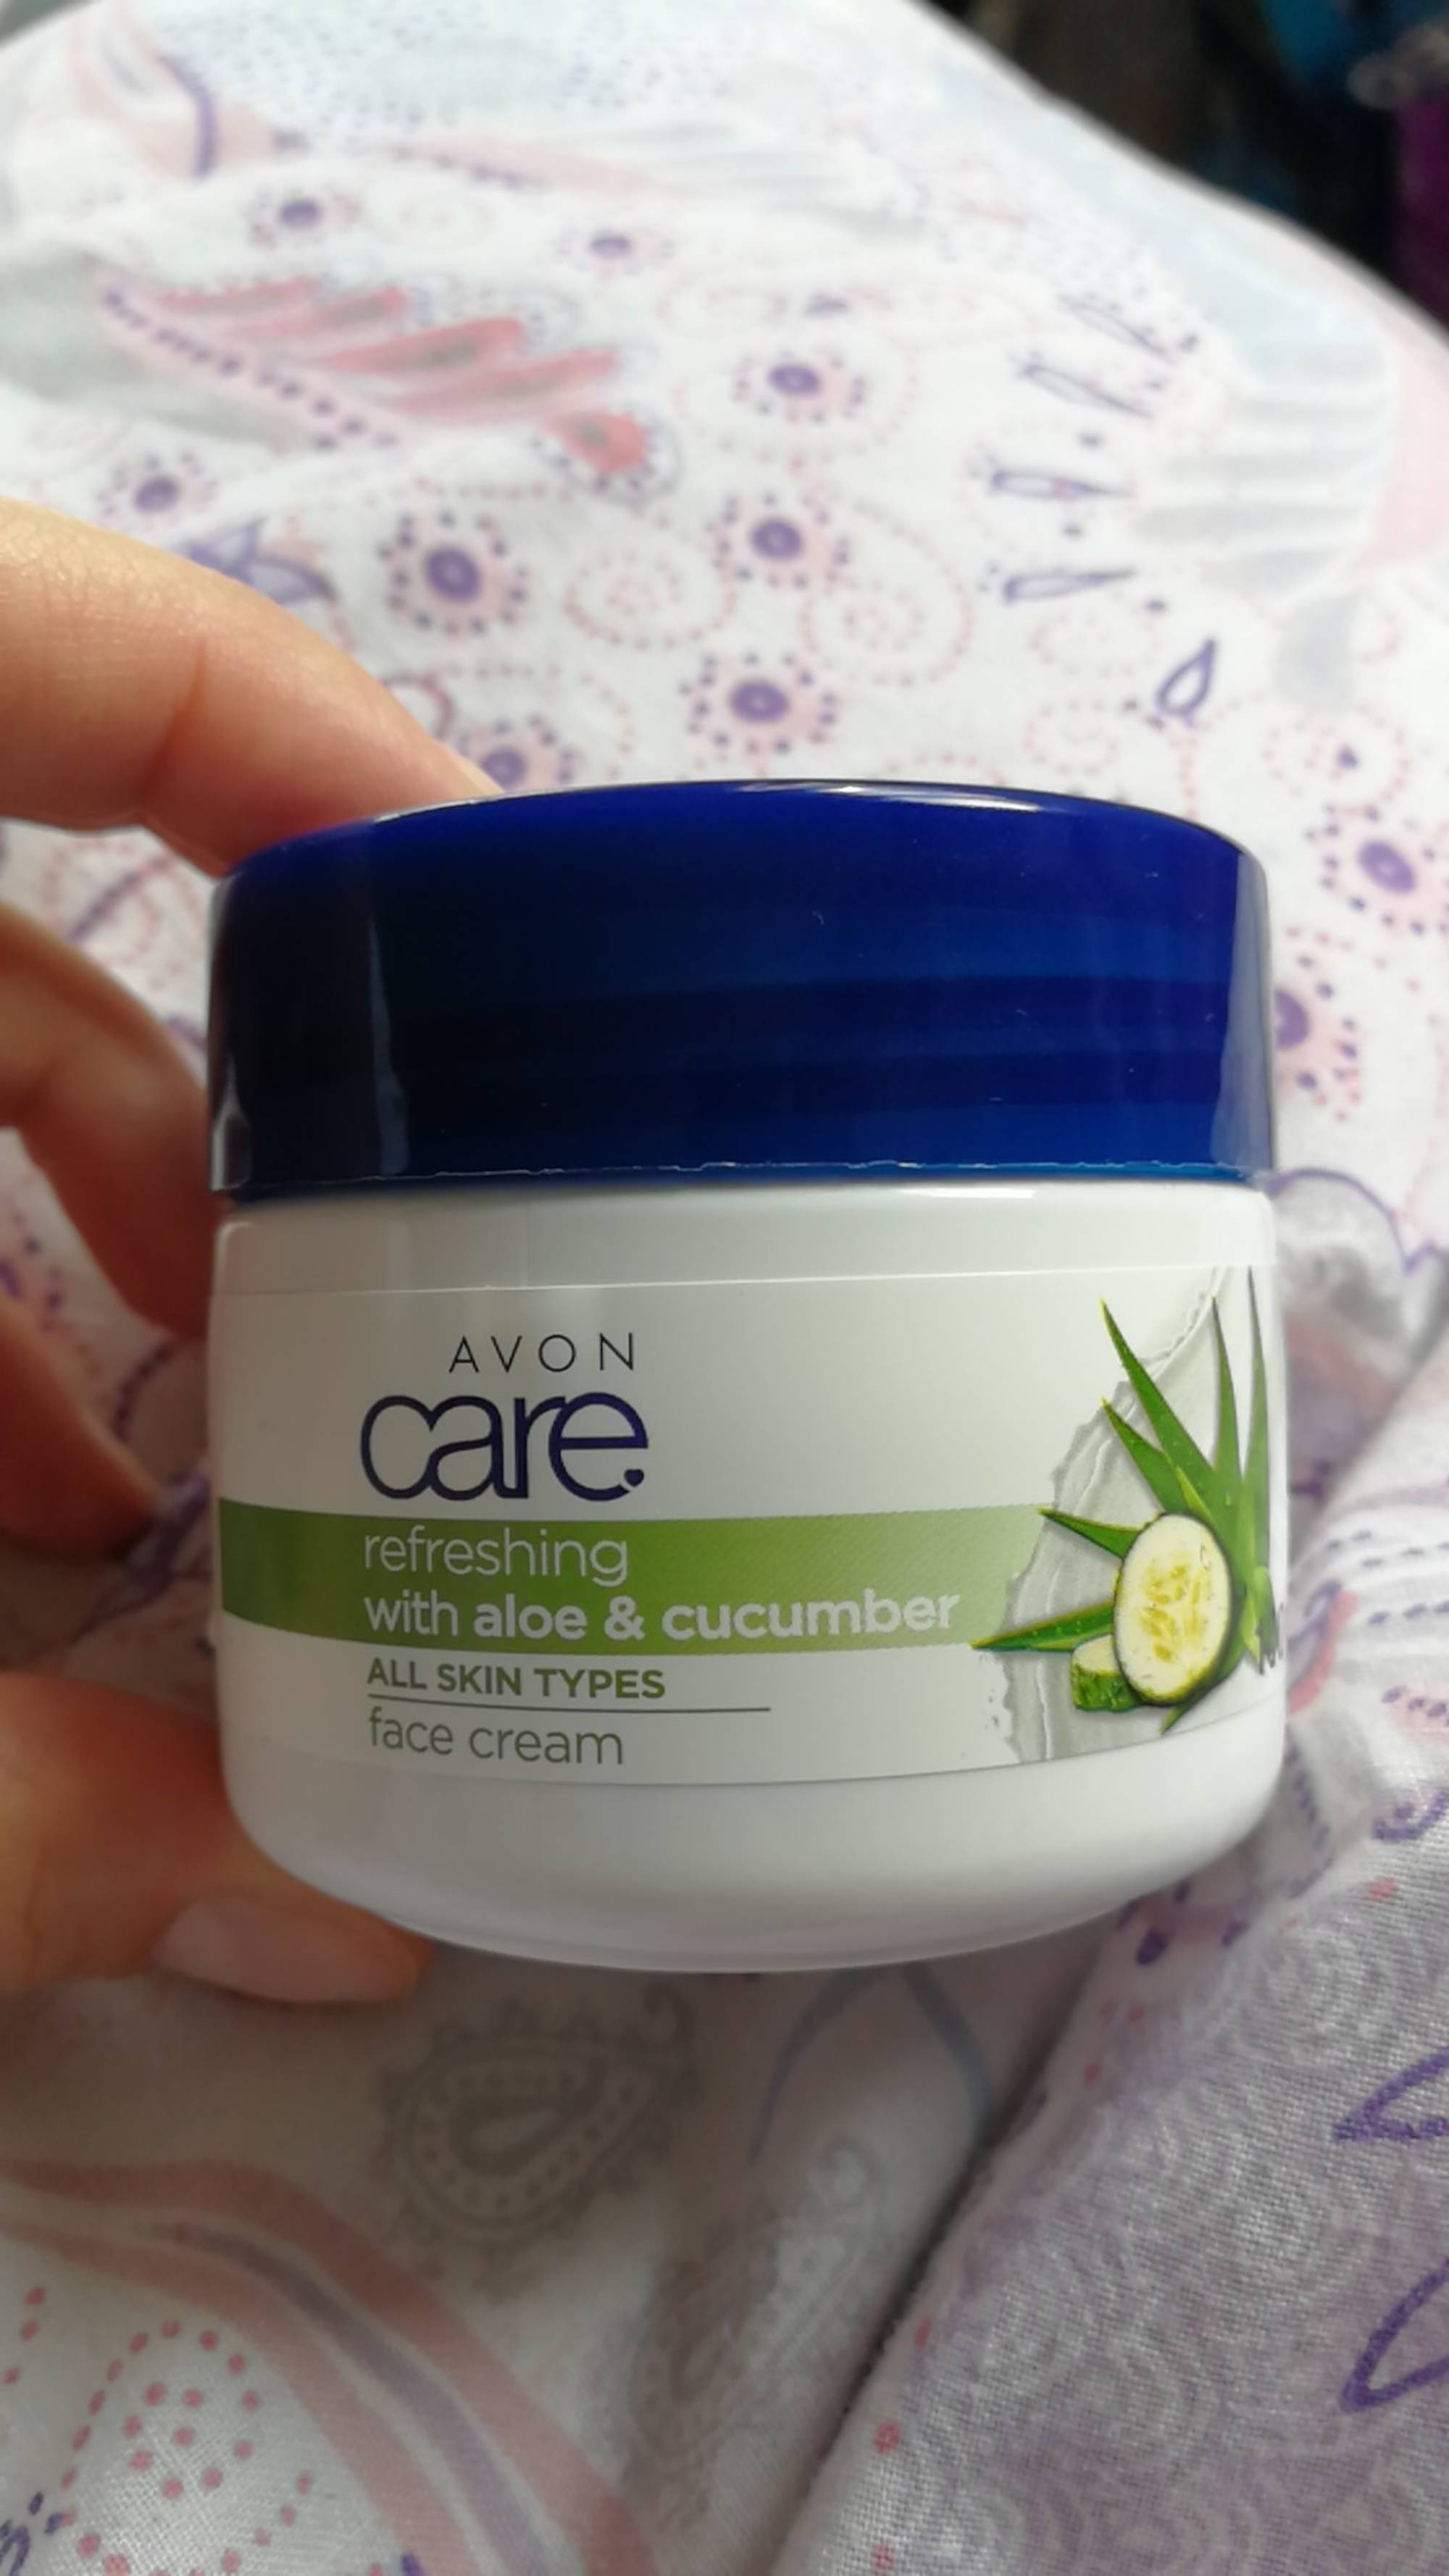 AVON - Refreshing with Aloe & Cucumber - Face cream